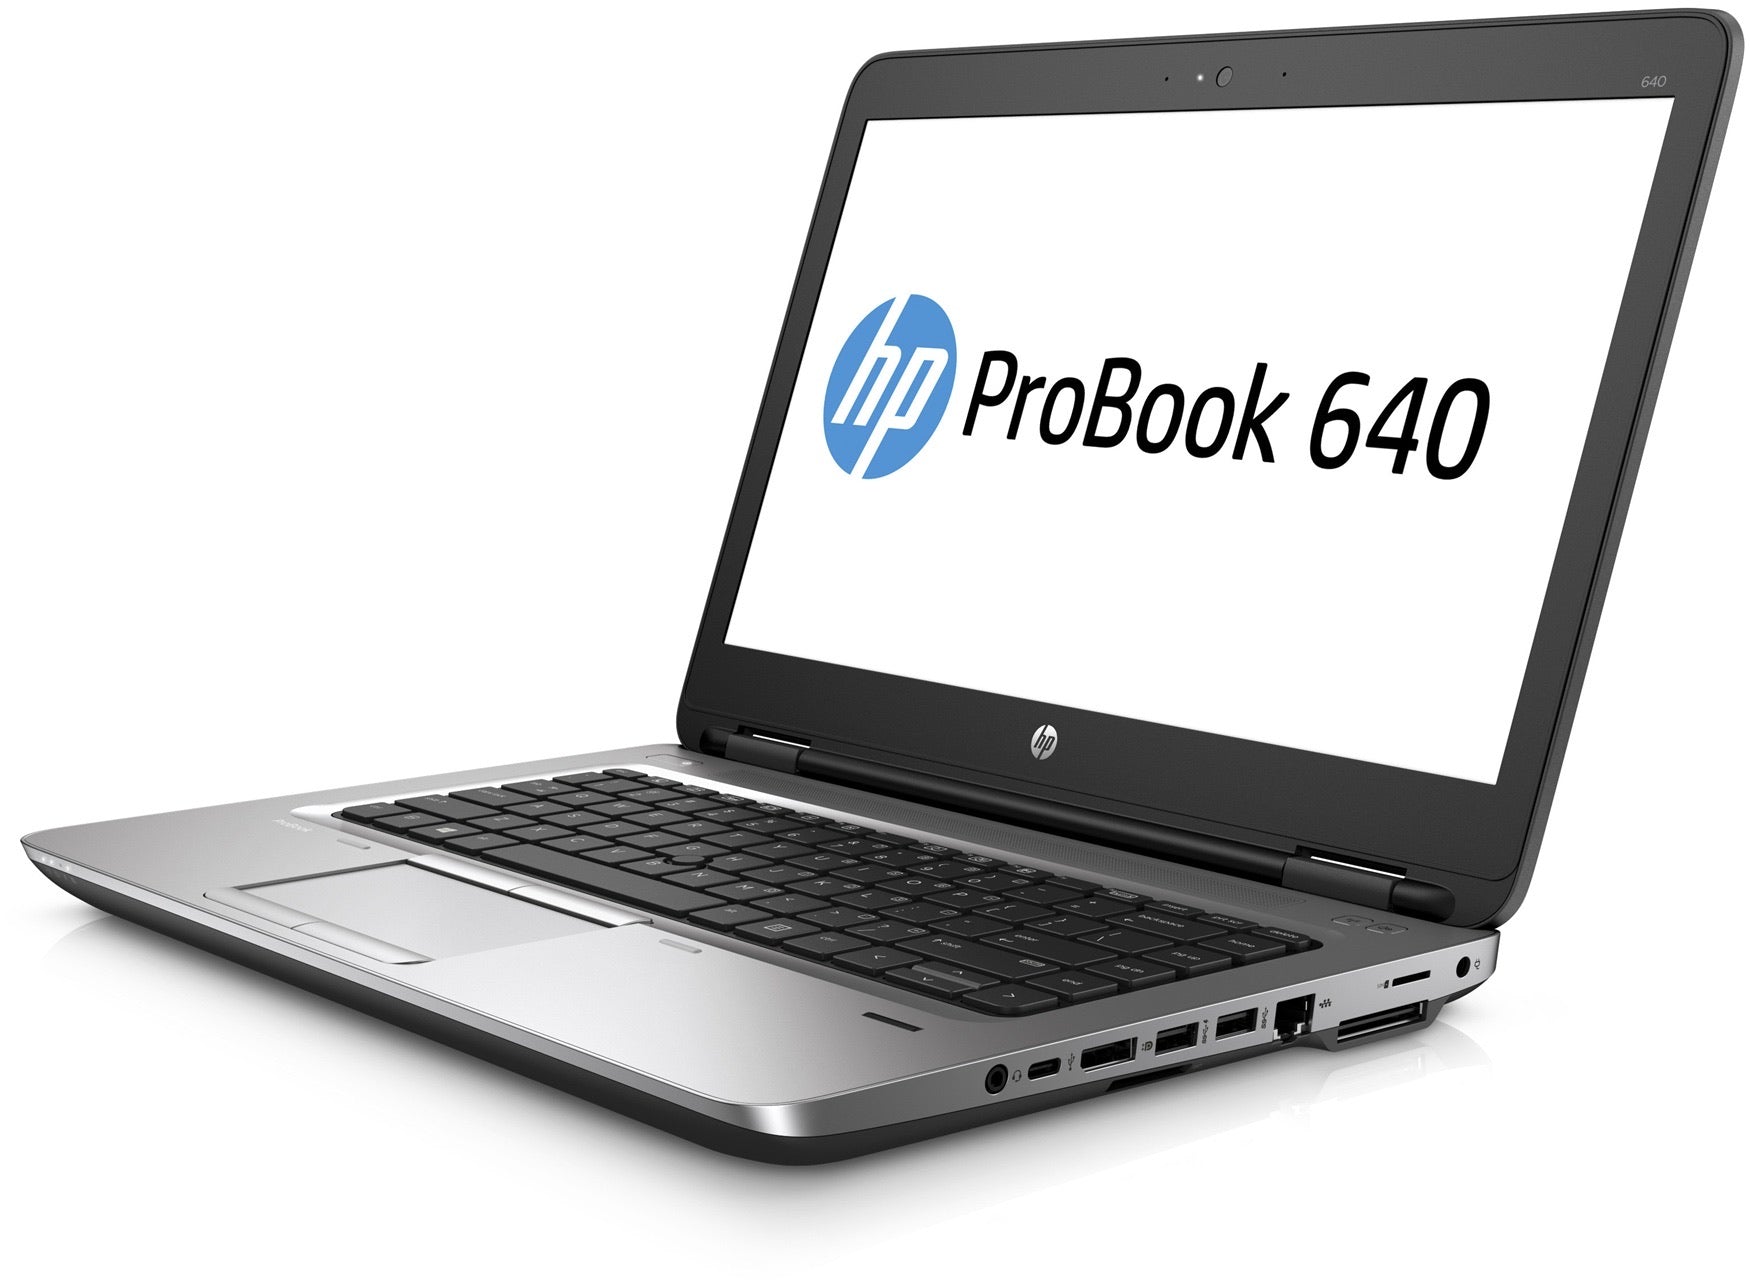 NOTEBOOK HP PROBOOK 640 G2 14” (i5 8GB 240GB SSD) Reacondicionado Grado A